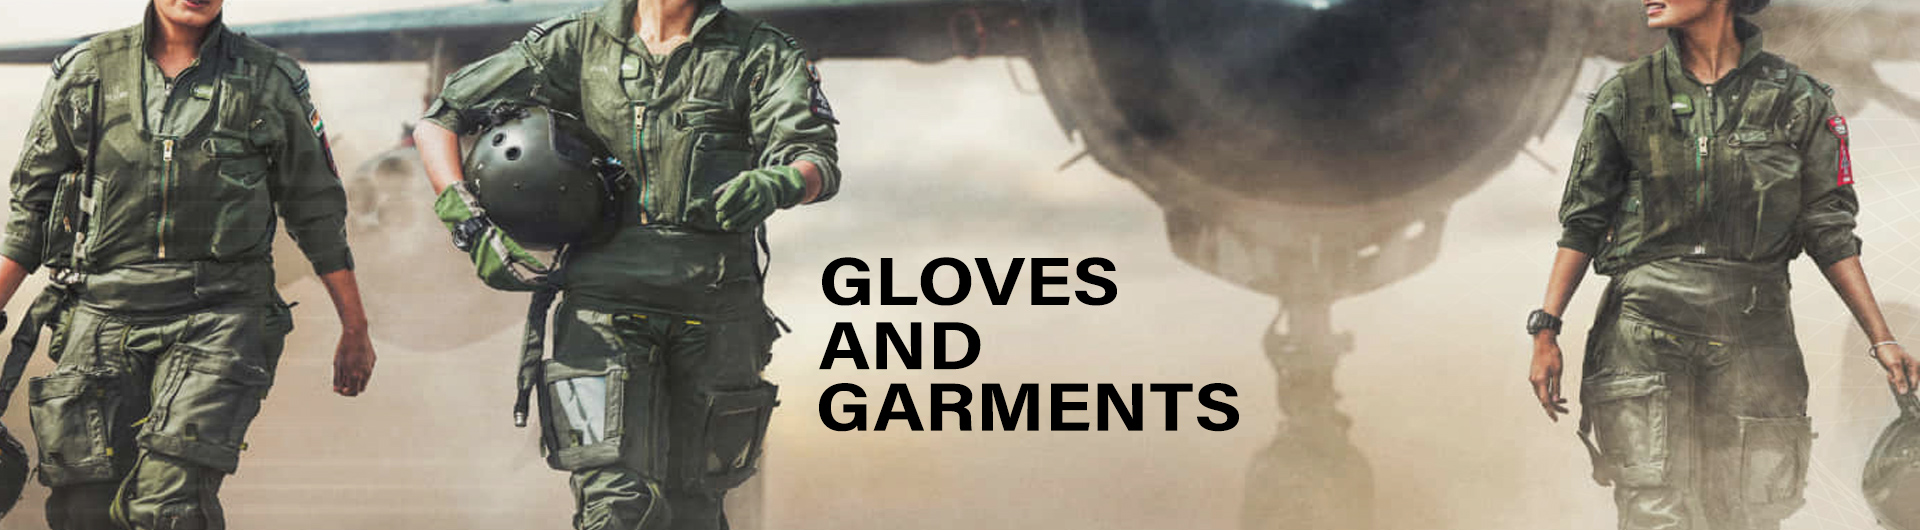 Gloves & Garments Banner